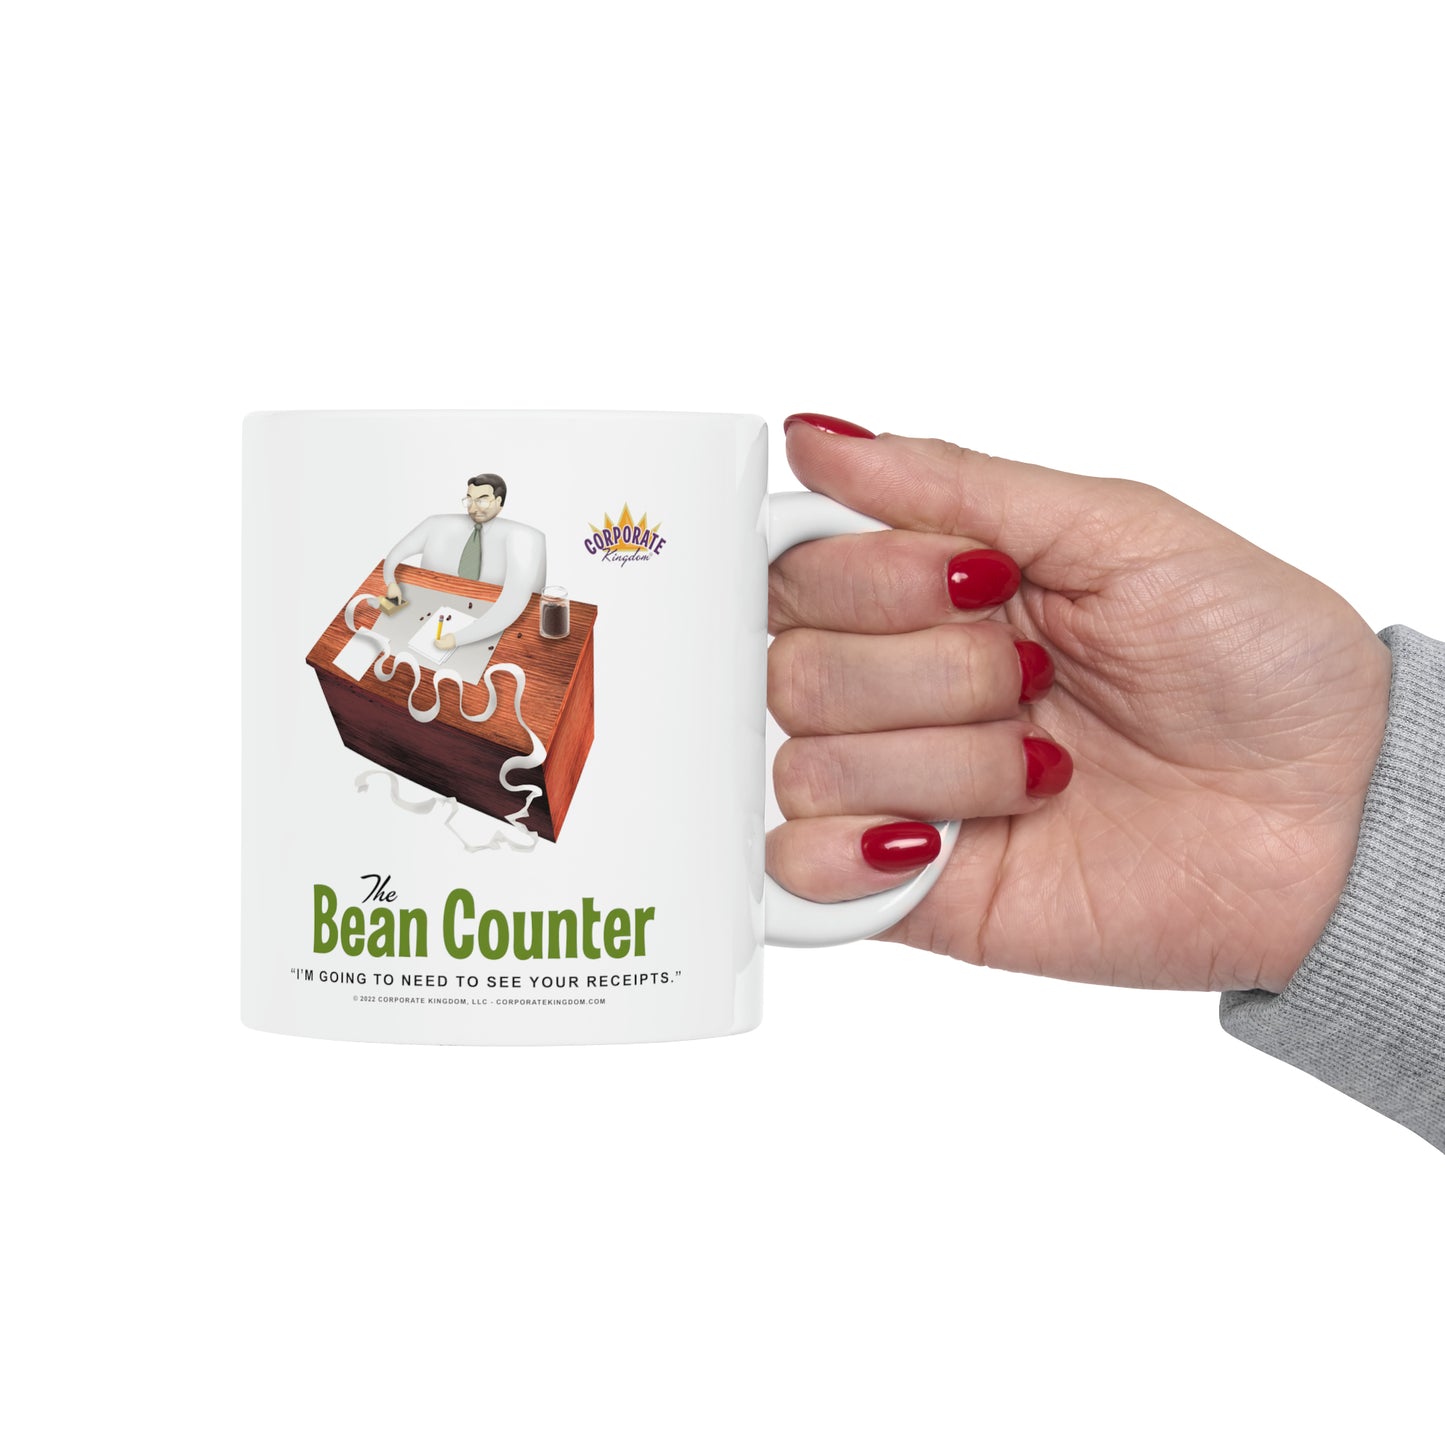 Bean Counter Coffee Mug by Corporate Kingdom®